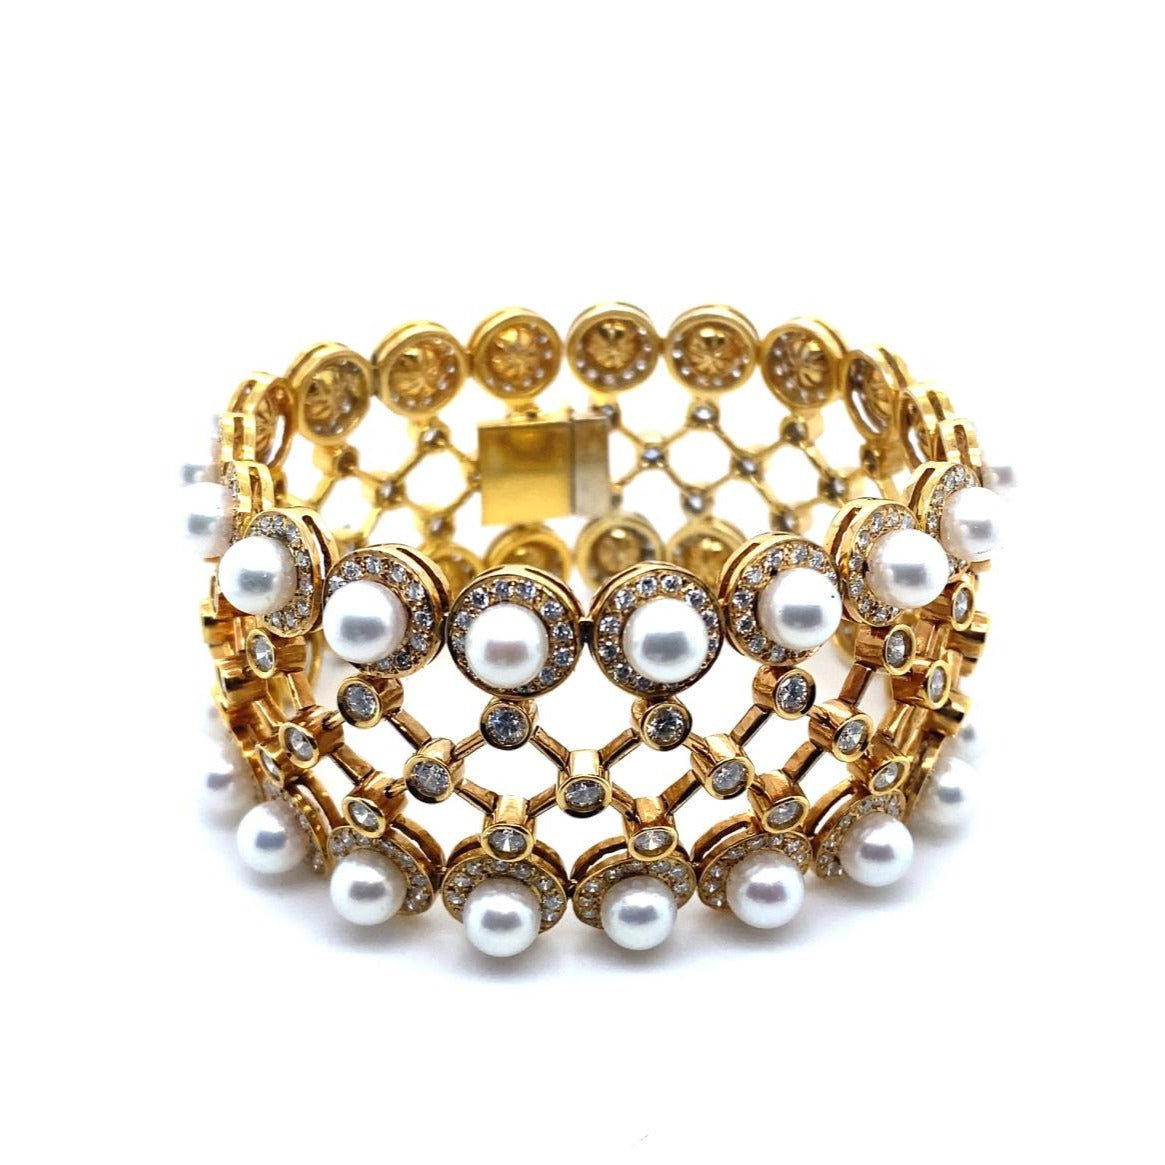 7.80 Carat Diamond and Cultured Akoya Pearl Heavy 18K Yellow Gold Bracelet Size 6.75